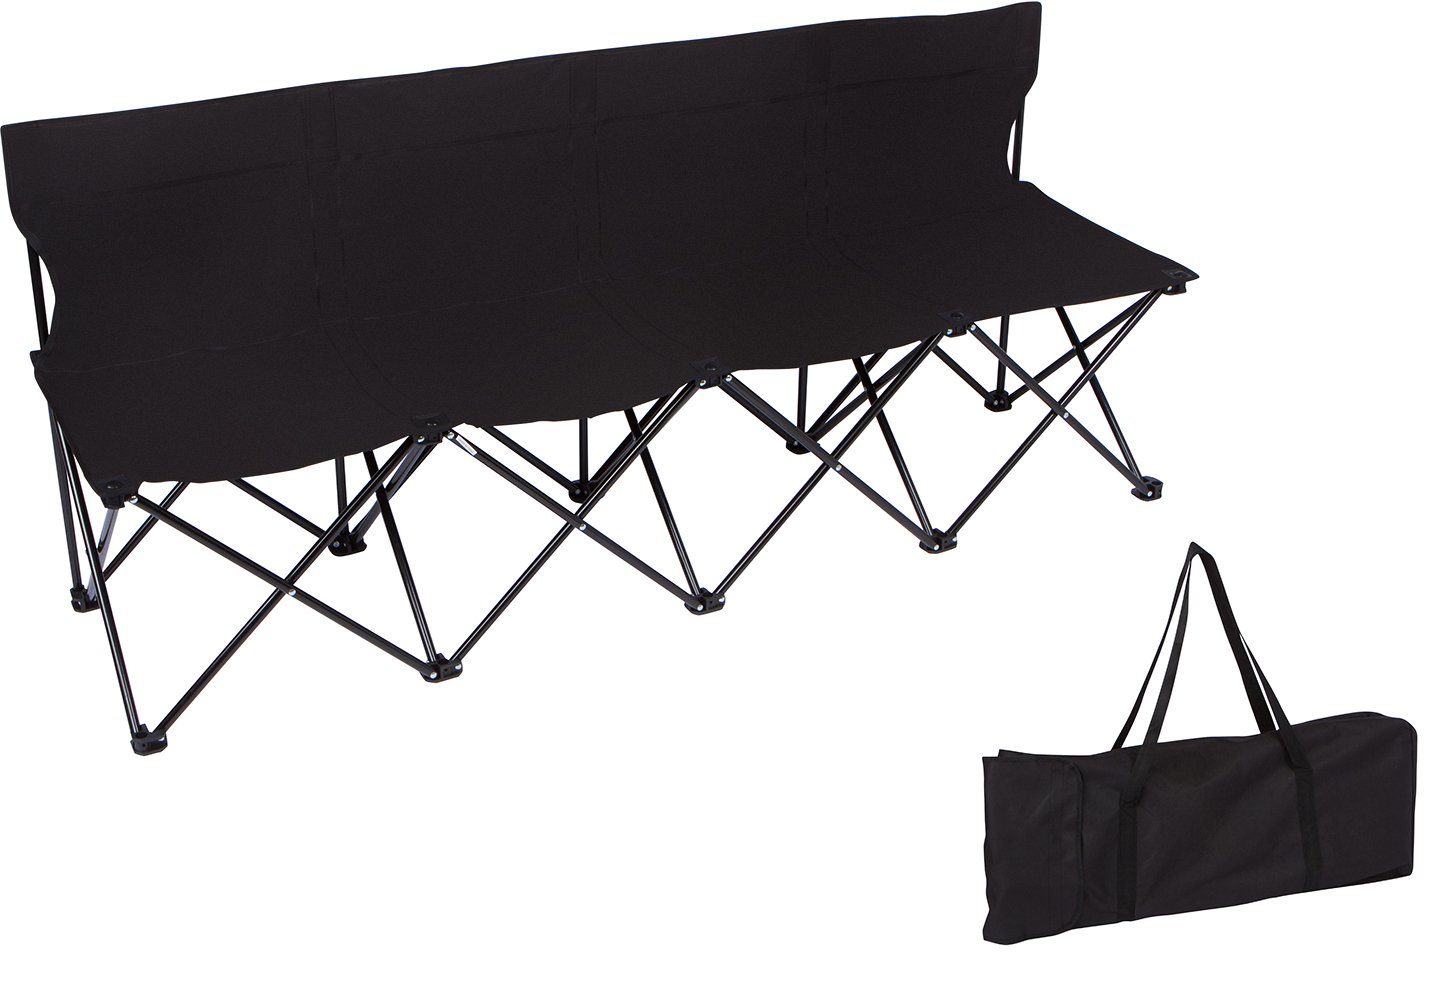 Portable 4-Seater Folding Team Sports Sideline Bench by Trademark Innovations Black並行輸入品